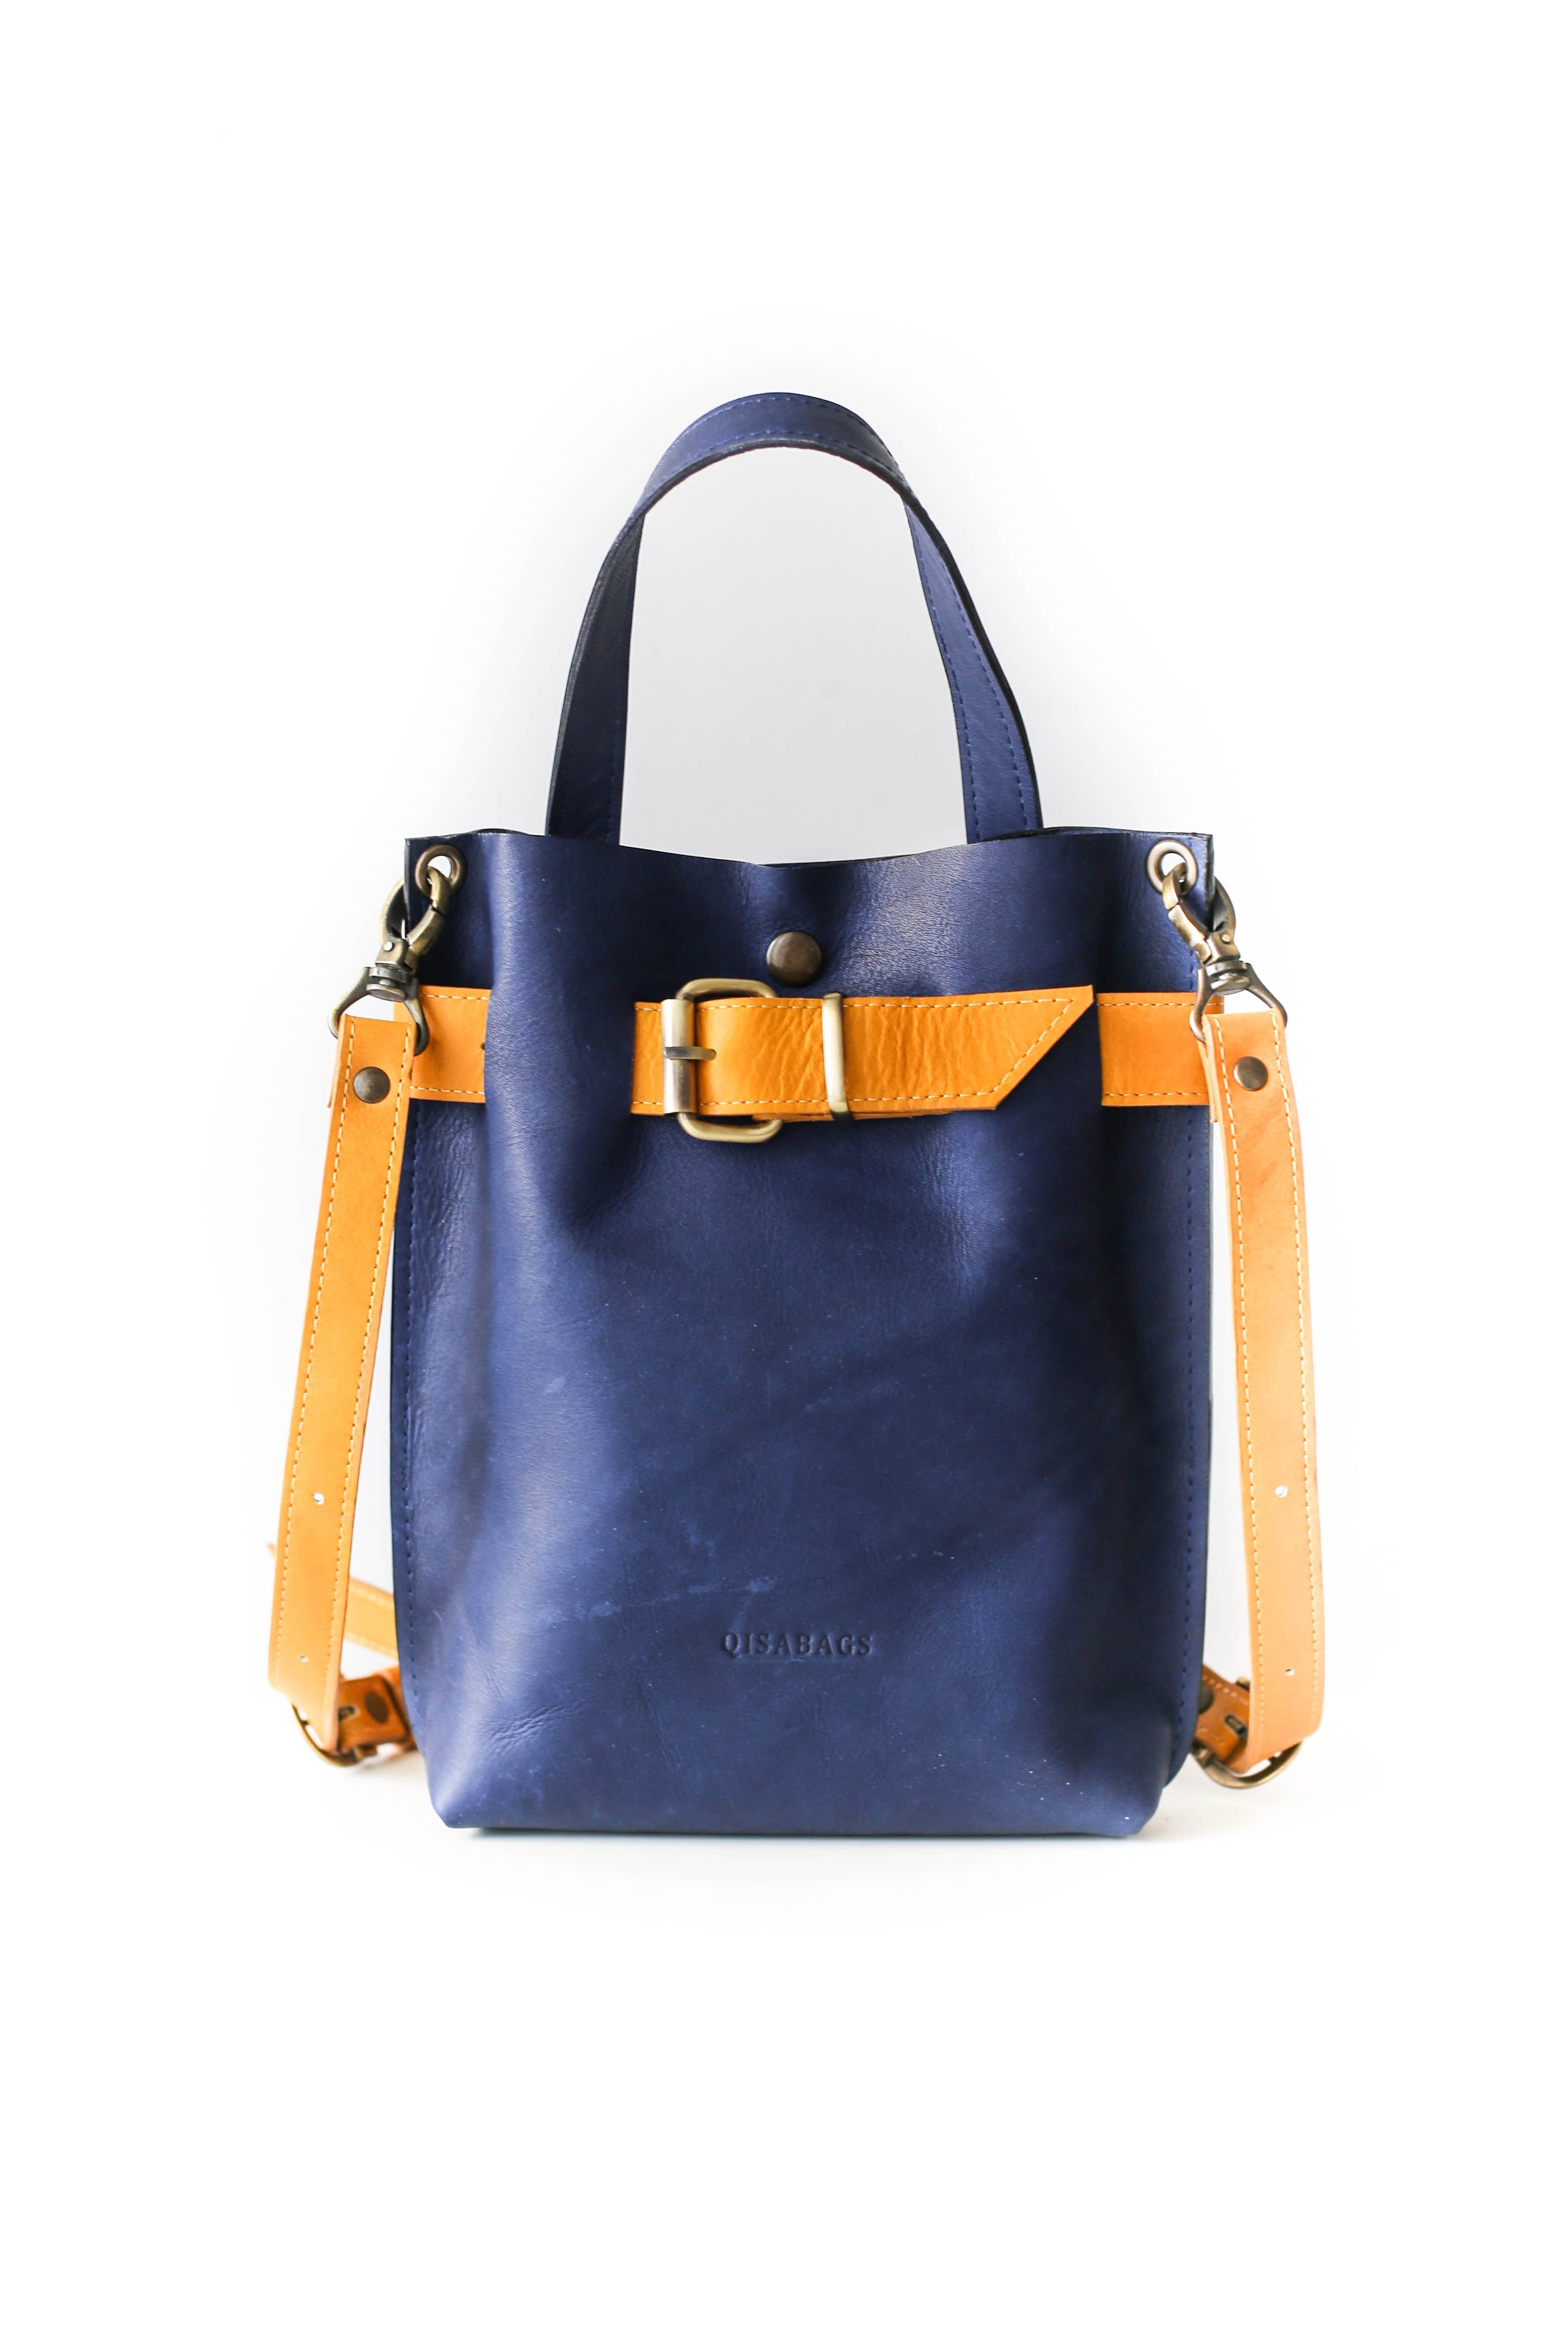 Riviere Handbag, Multi-Colored Light Blue and Yellow Ostrich – Baron Paris